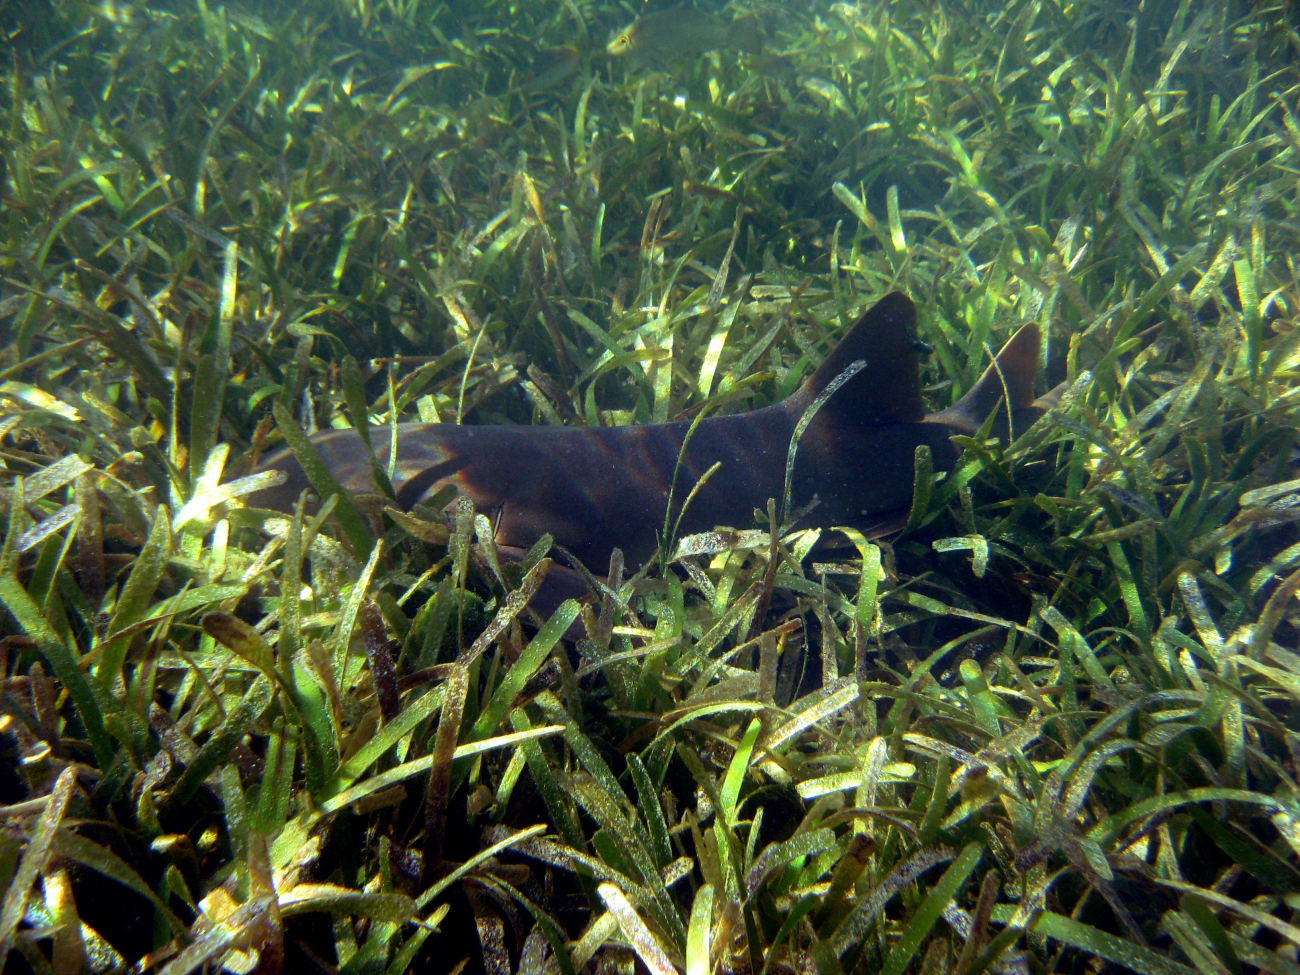 Nurse shark (Ginglymostoma cirratum) in turtle grass (Thalassia testudinum)